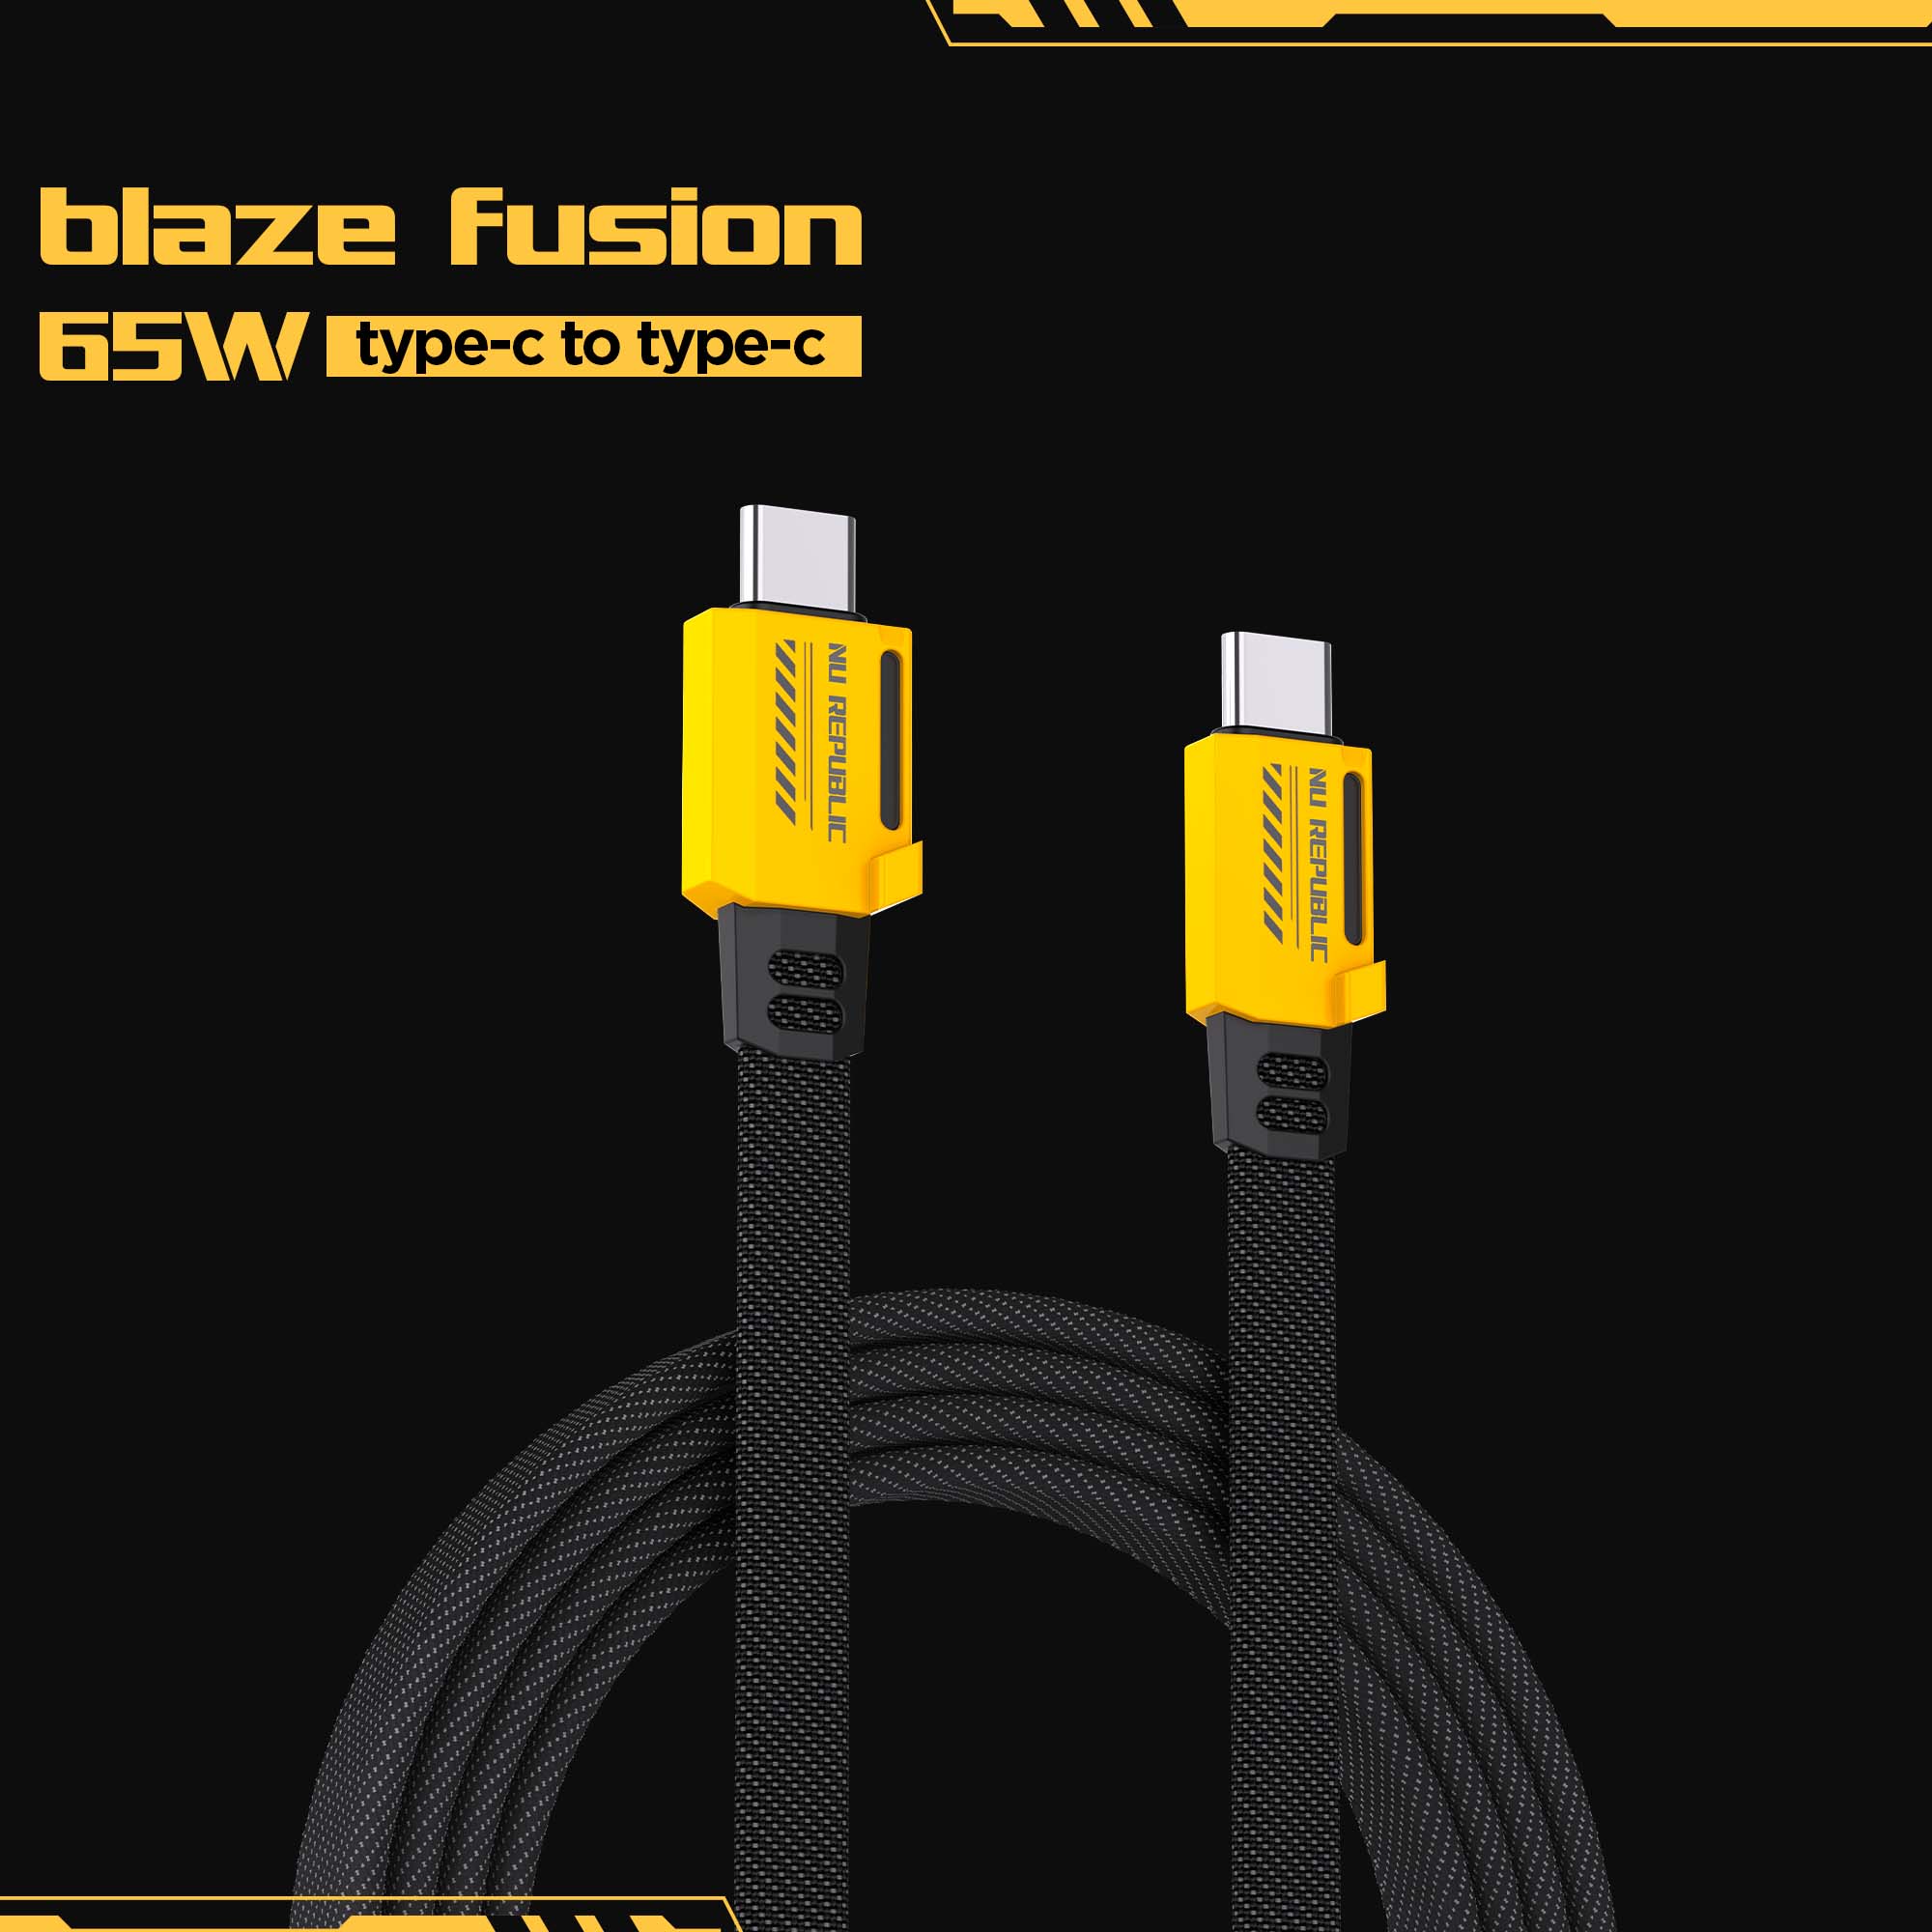 Blaze Fusion